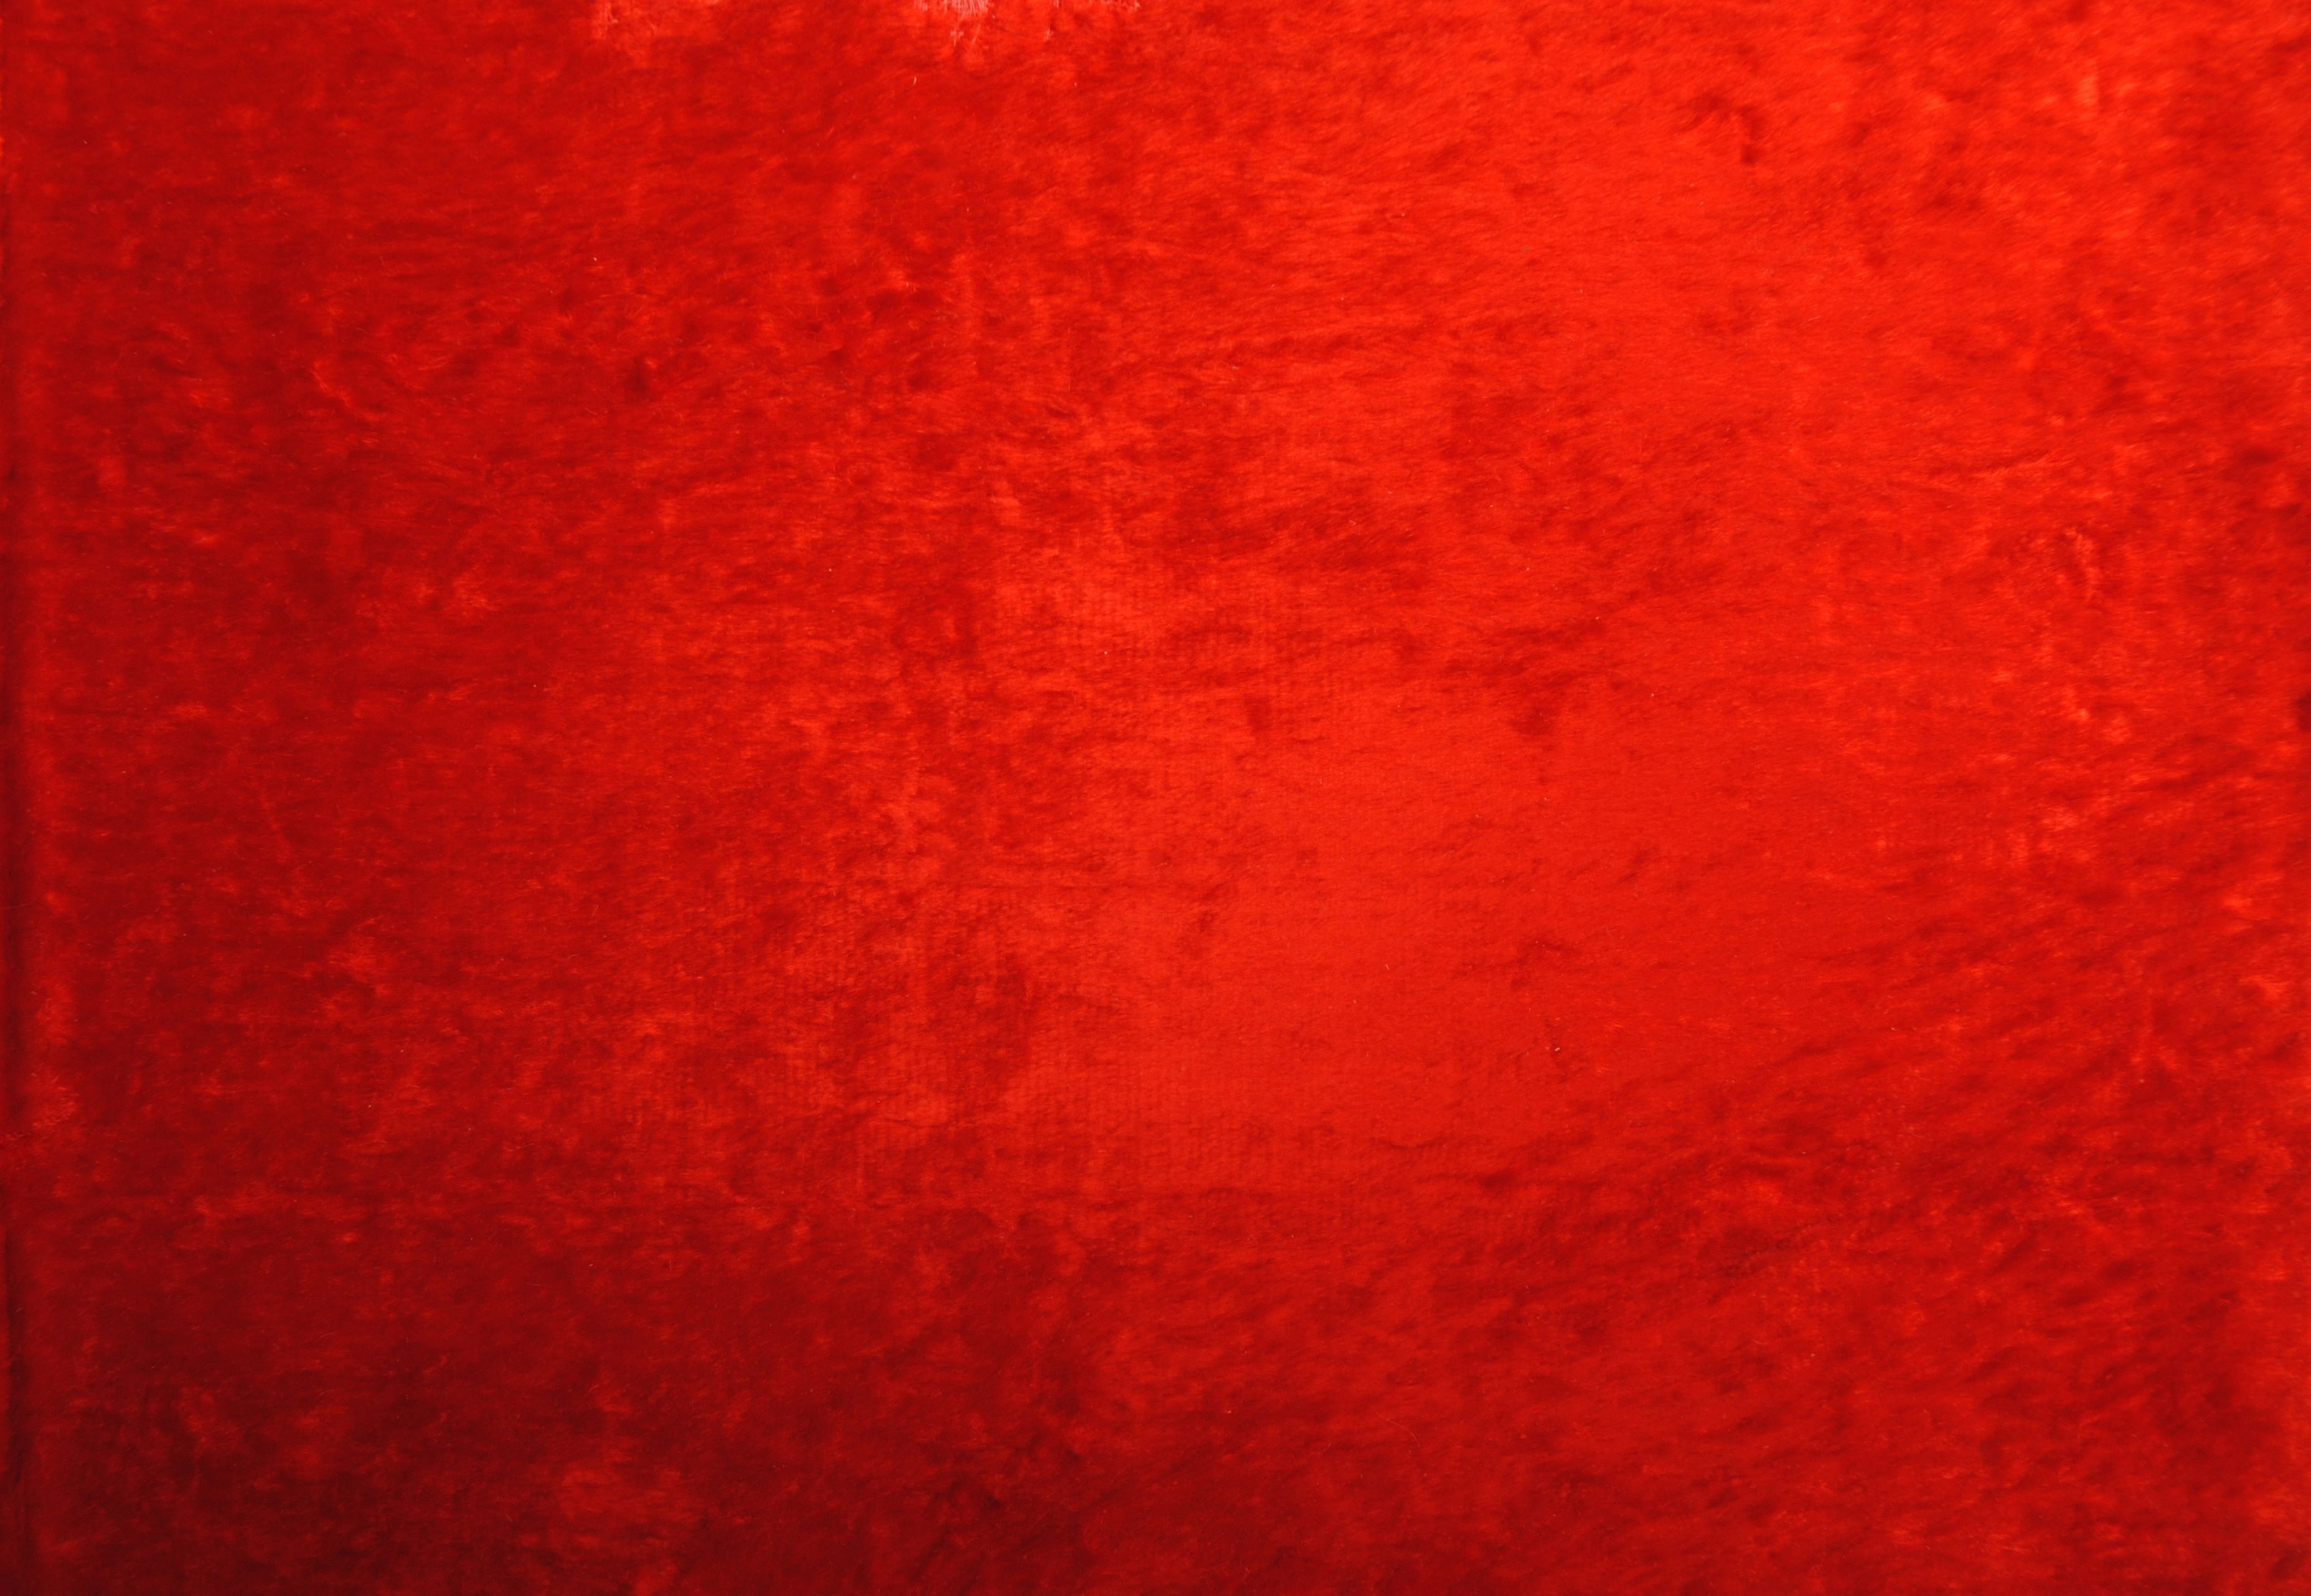 Download Texture Red Velvet Wallpaper 3712x2564 Full HD Backgrounds